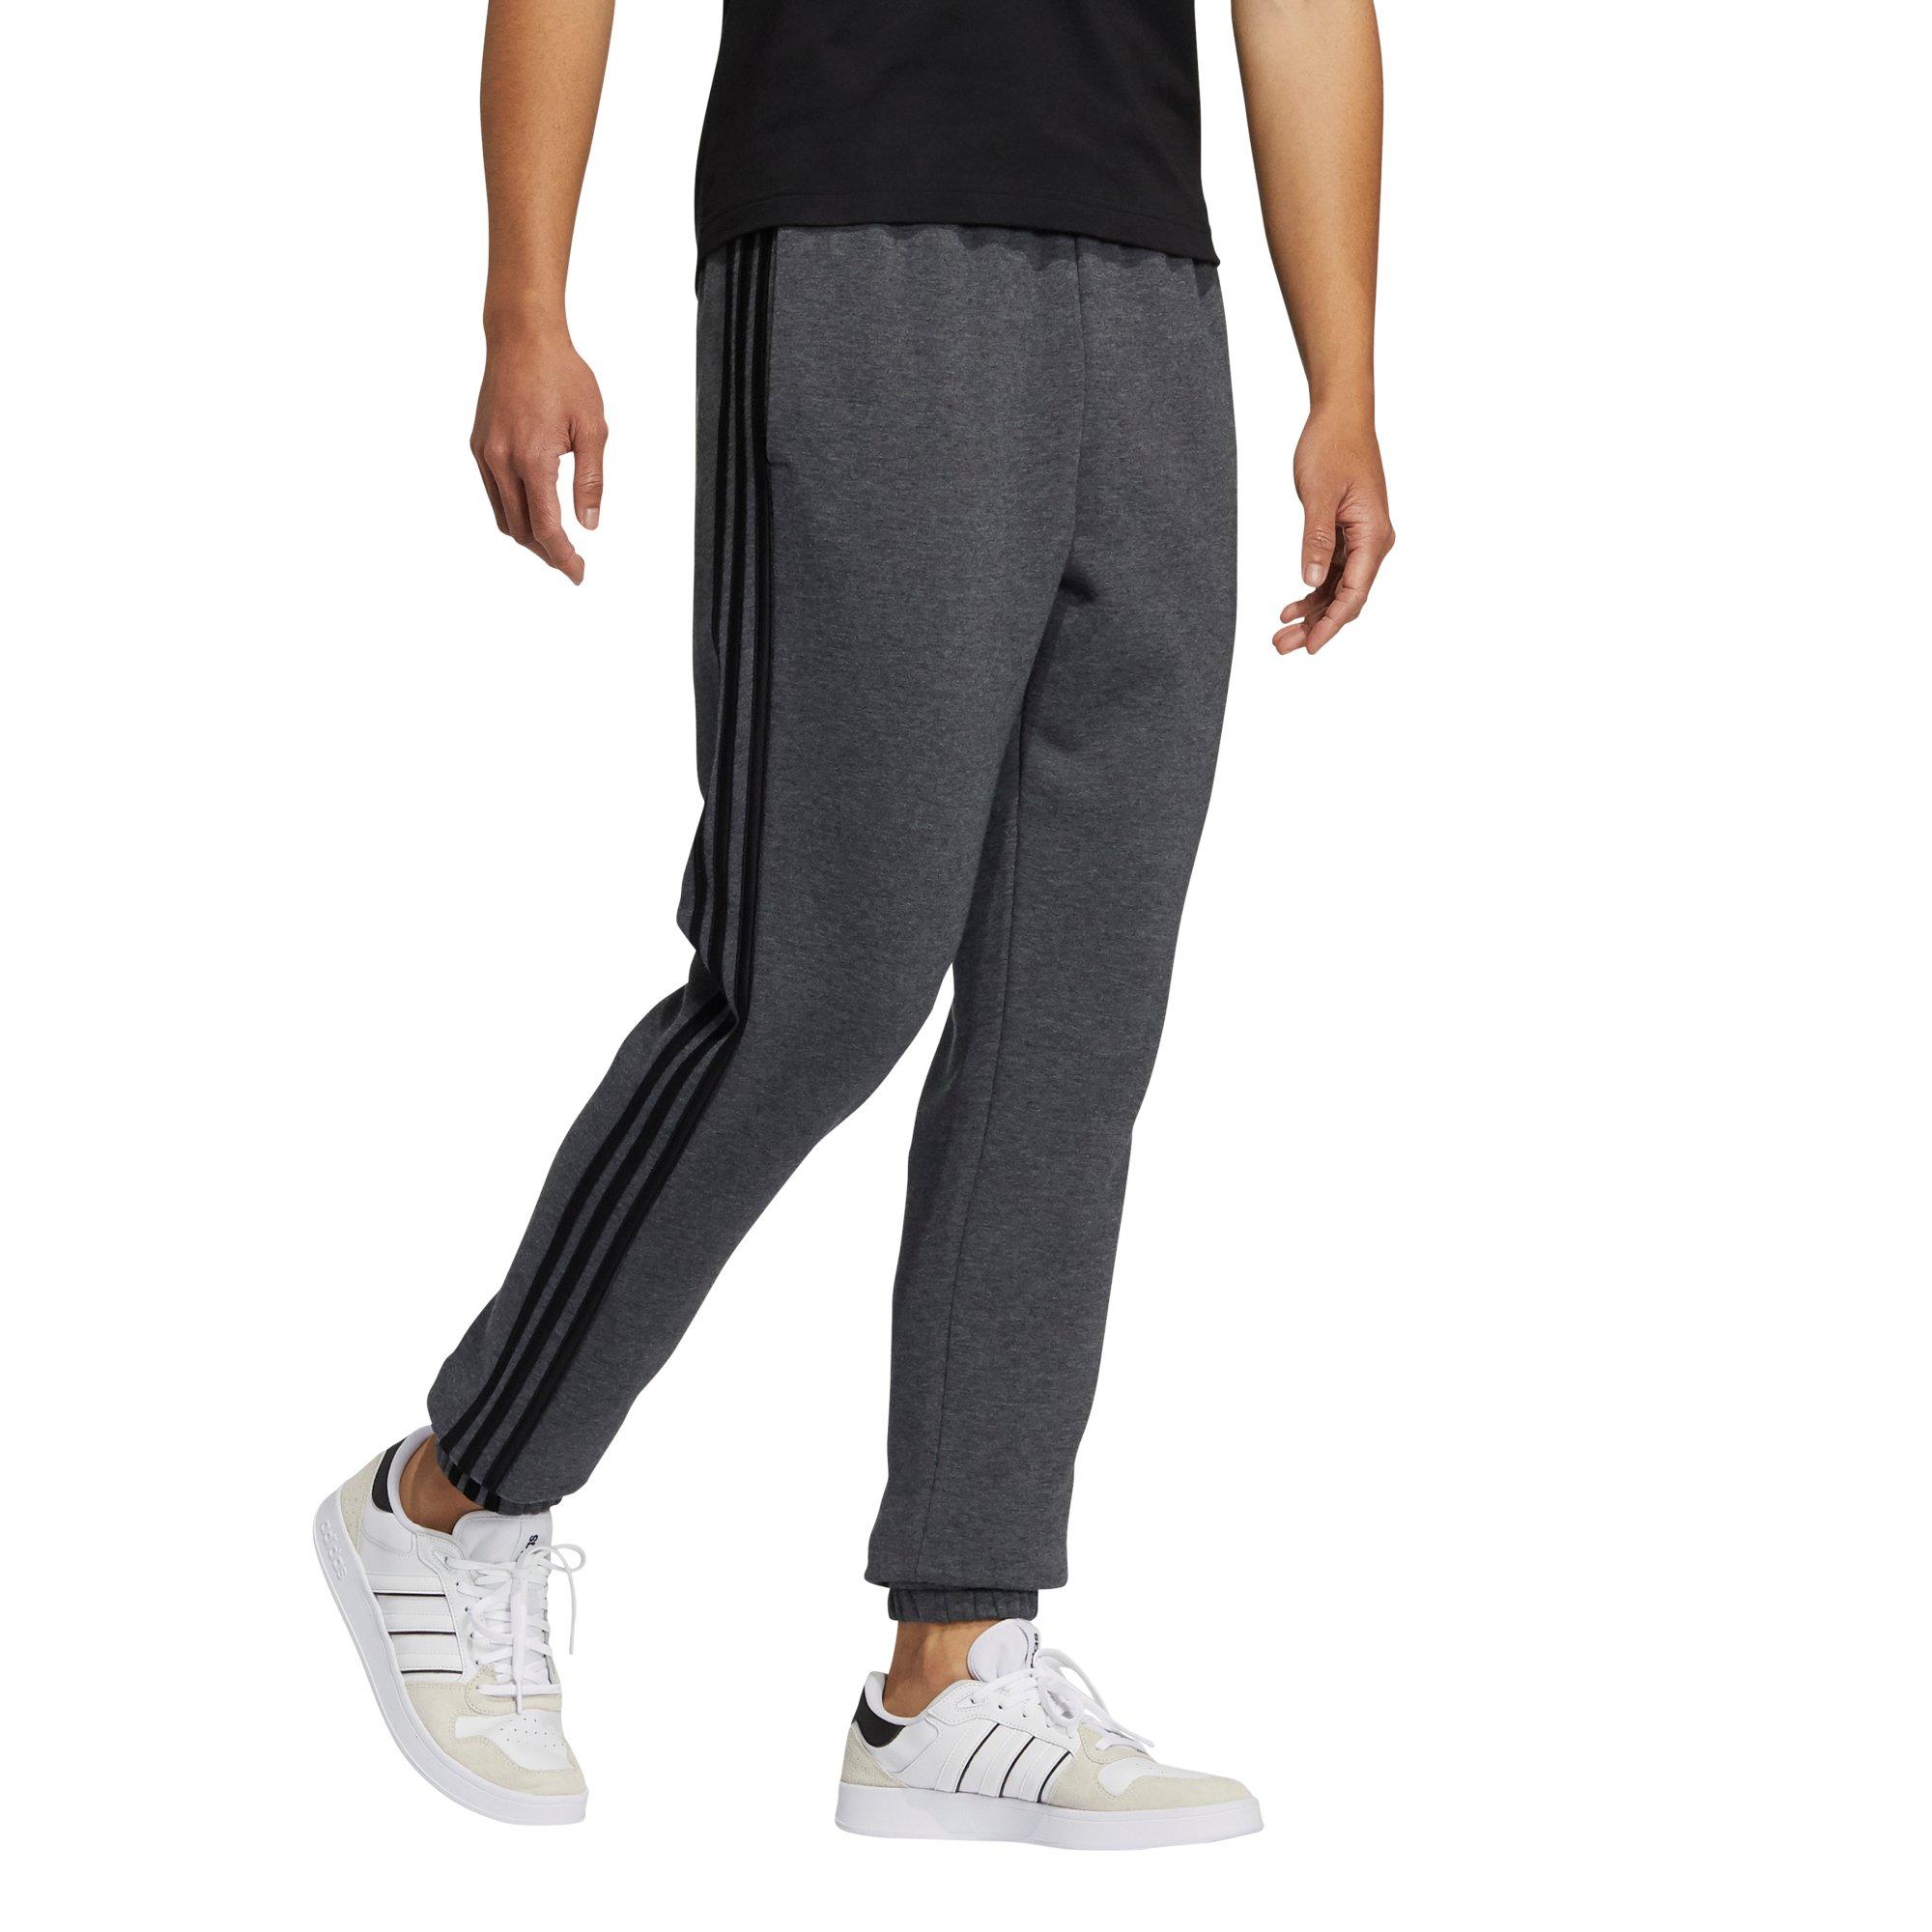 adidas Essentials Men's 3-Stripes Tapered Pants, Black/White, Medium